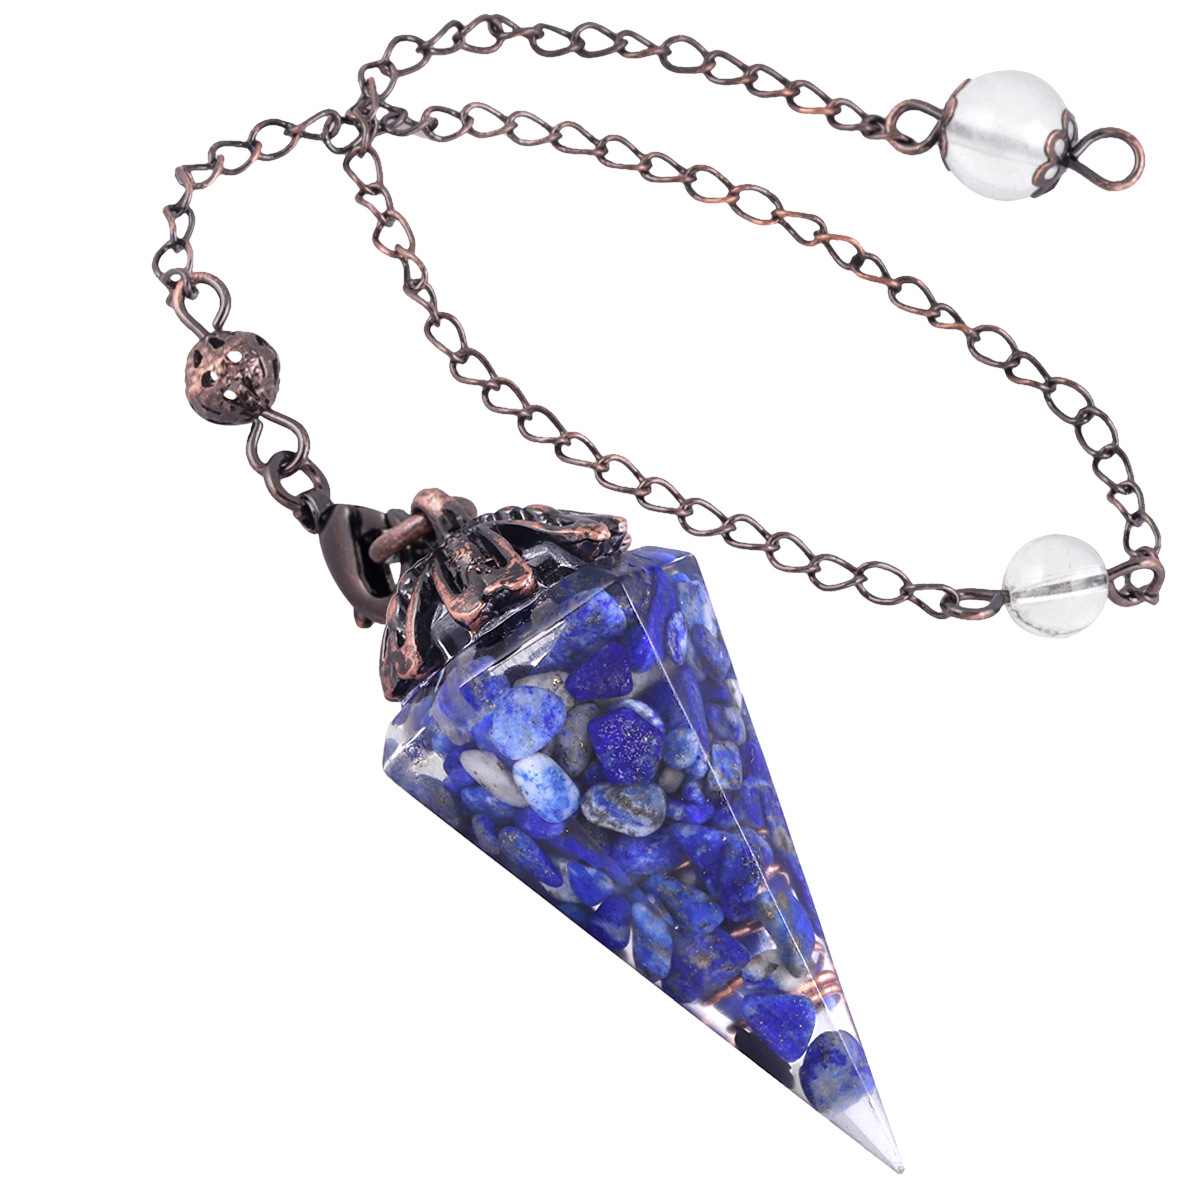 4:lazulite